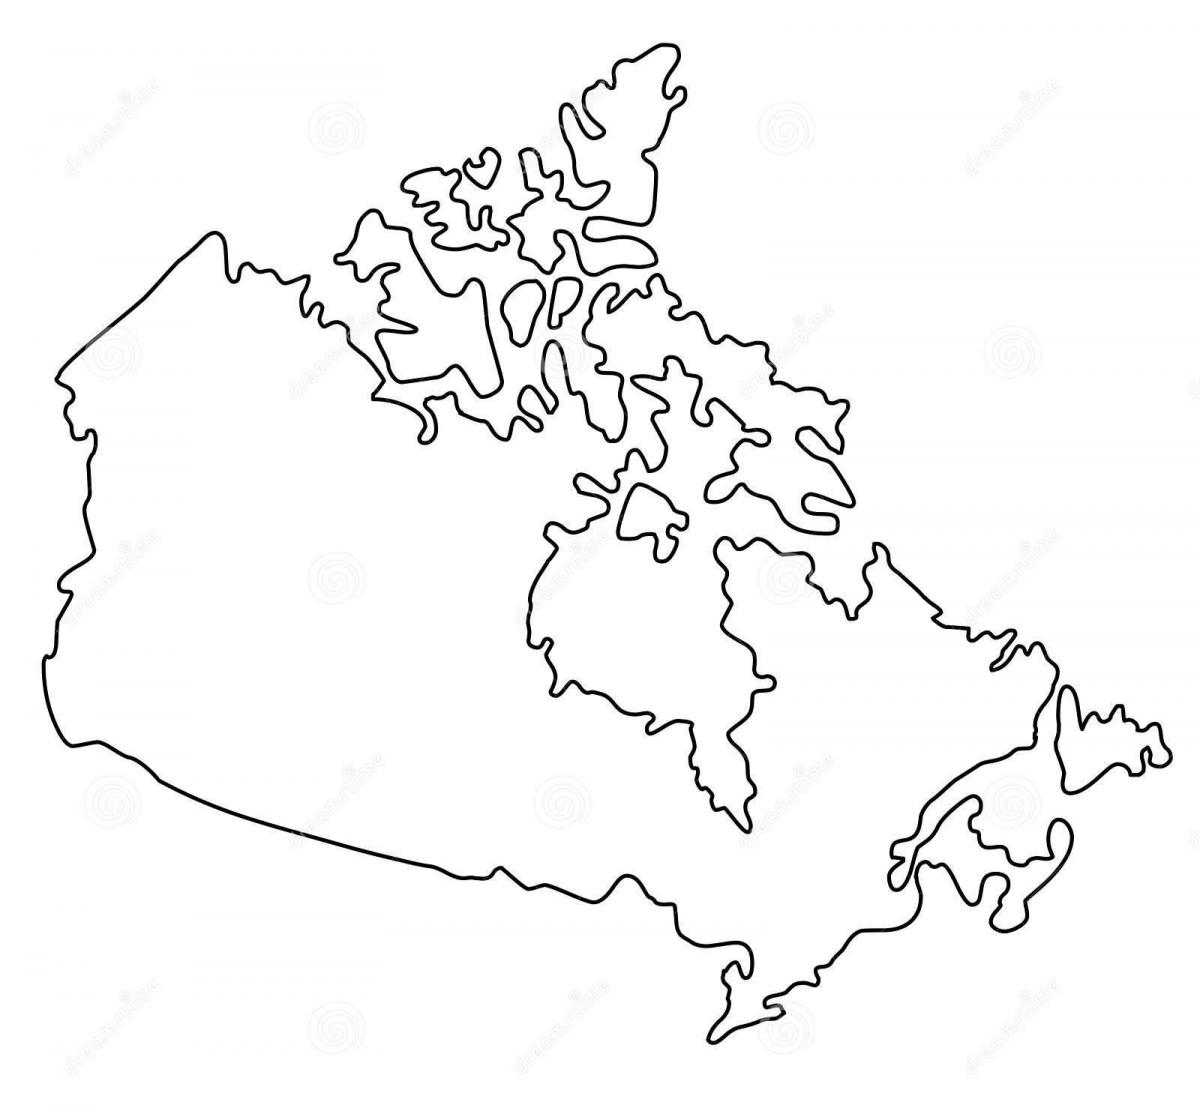 خريطة ملامح كندا